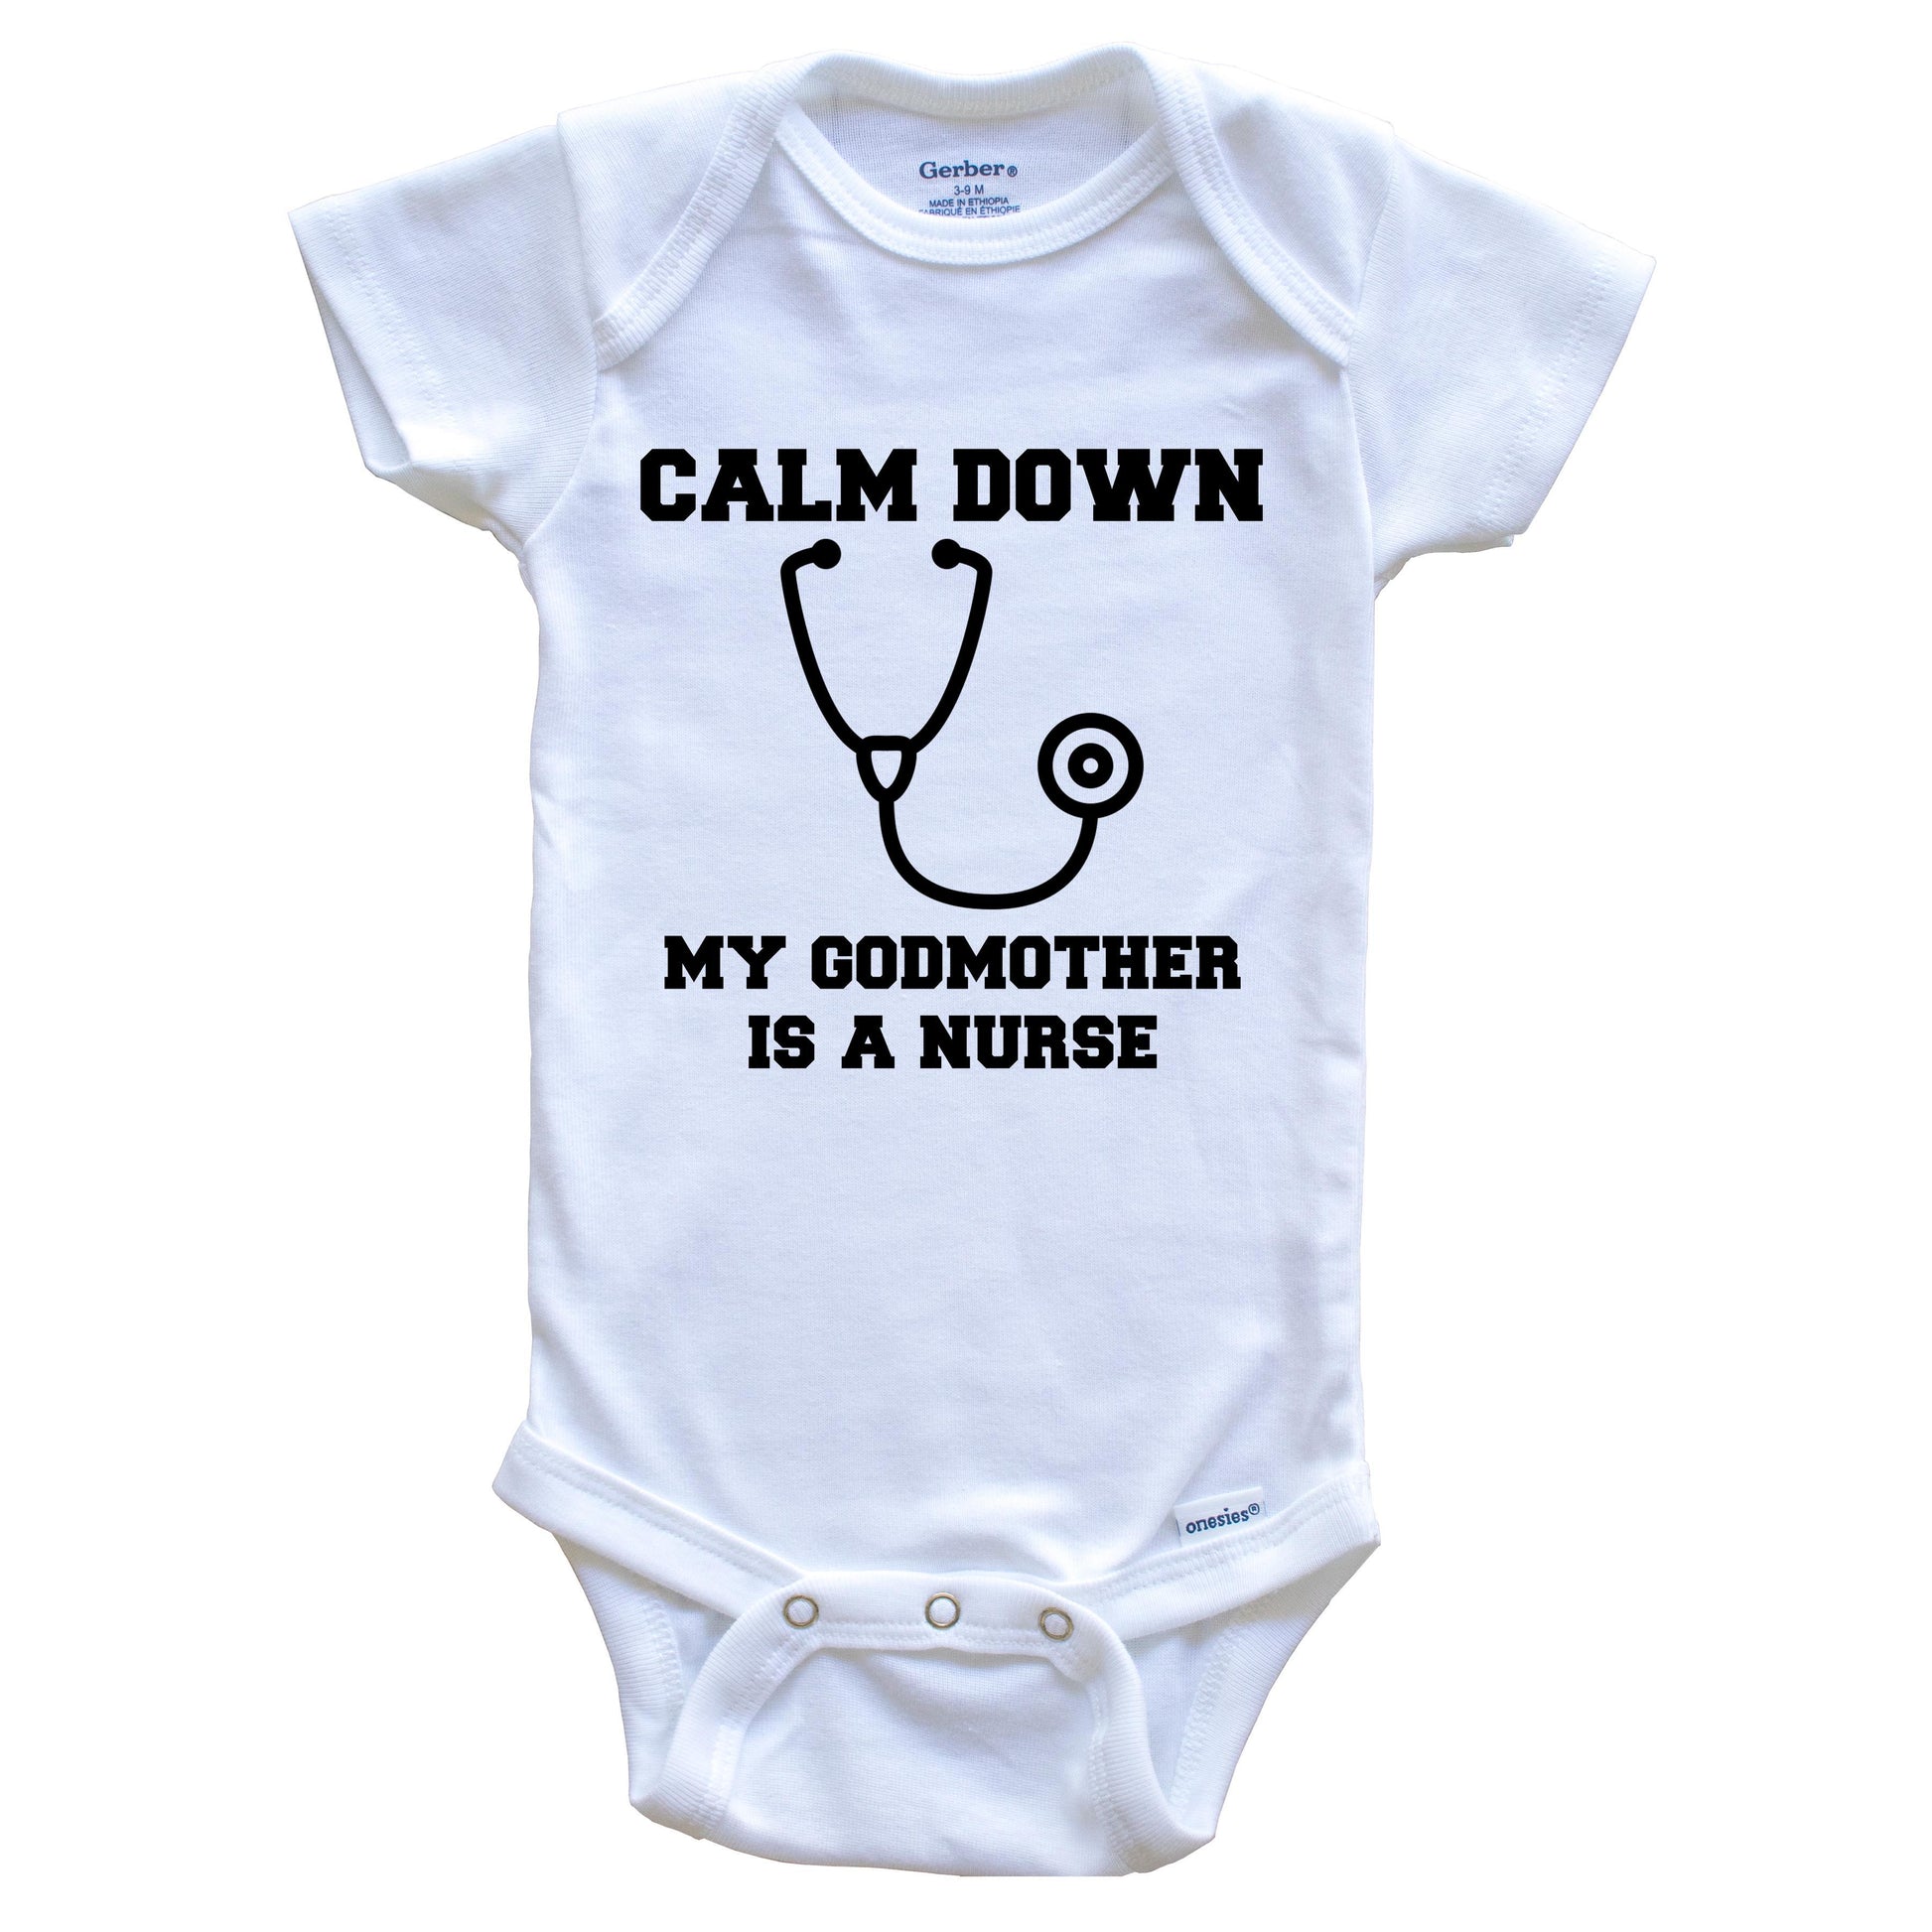 Calm Down My Godmother Is A Nurse Funny Baby Onesie - One Piece Baby Bodysuit